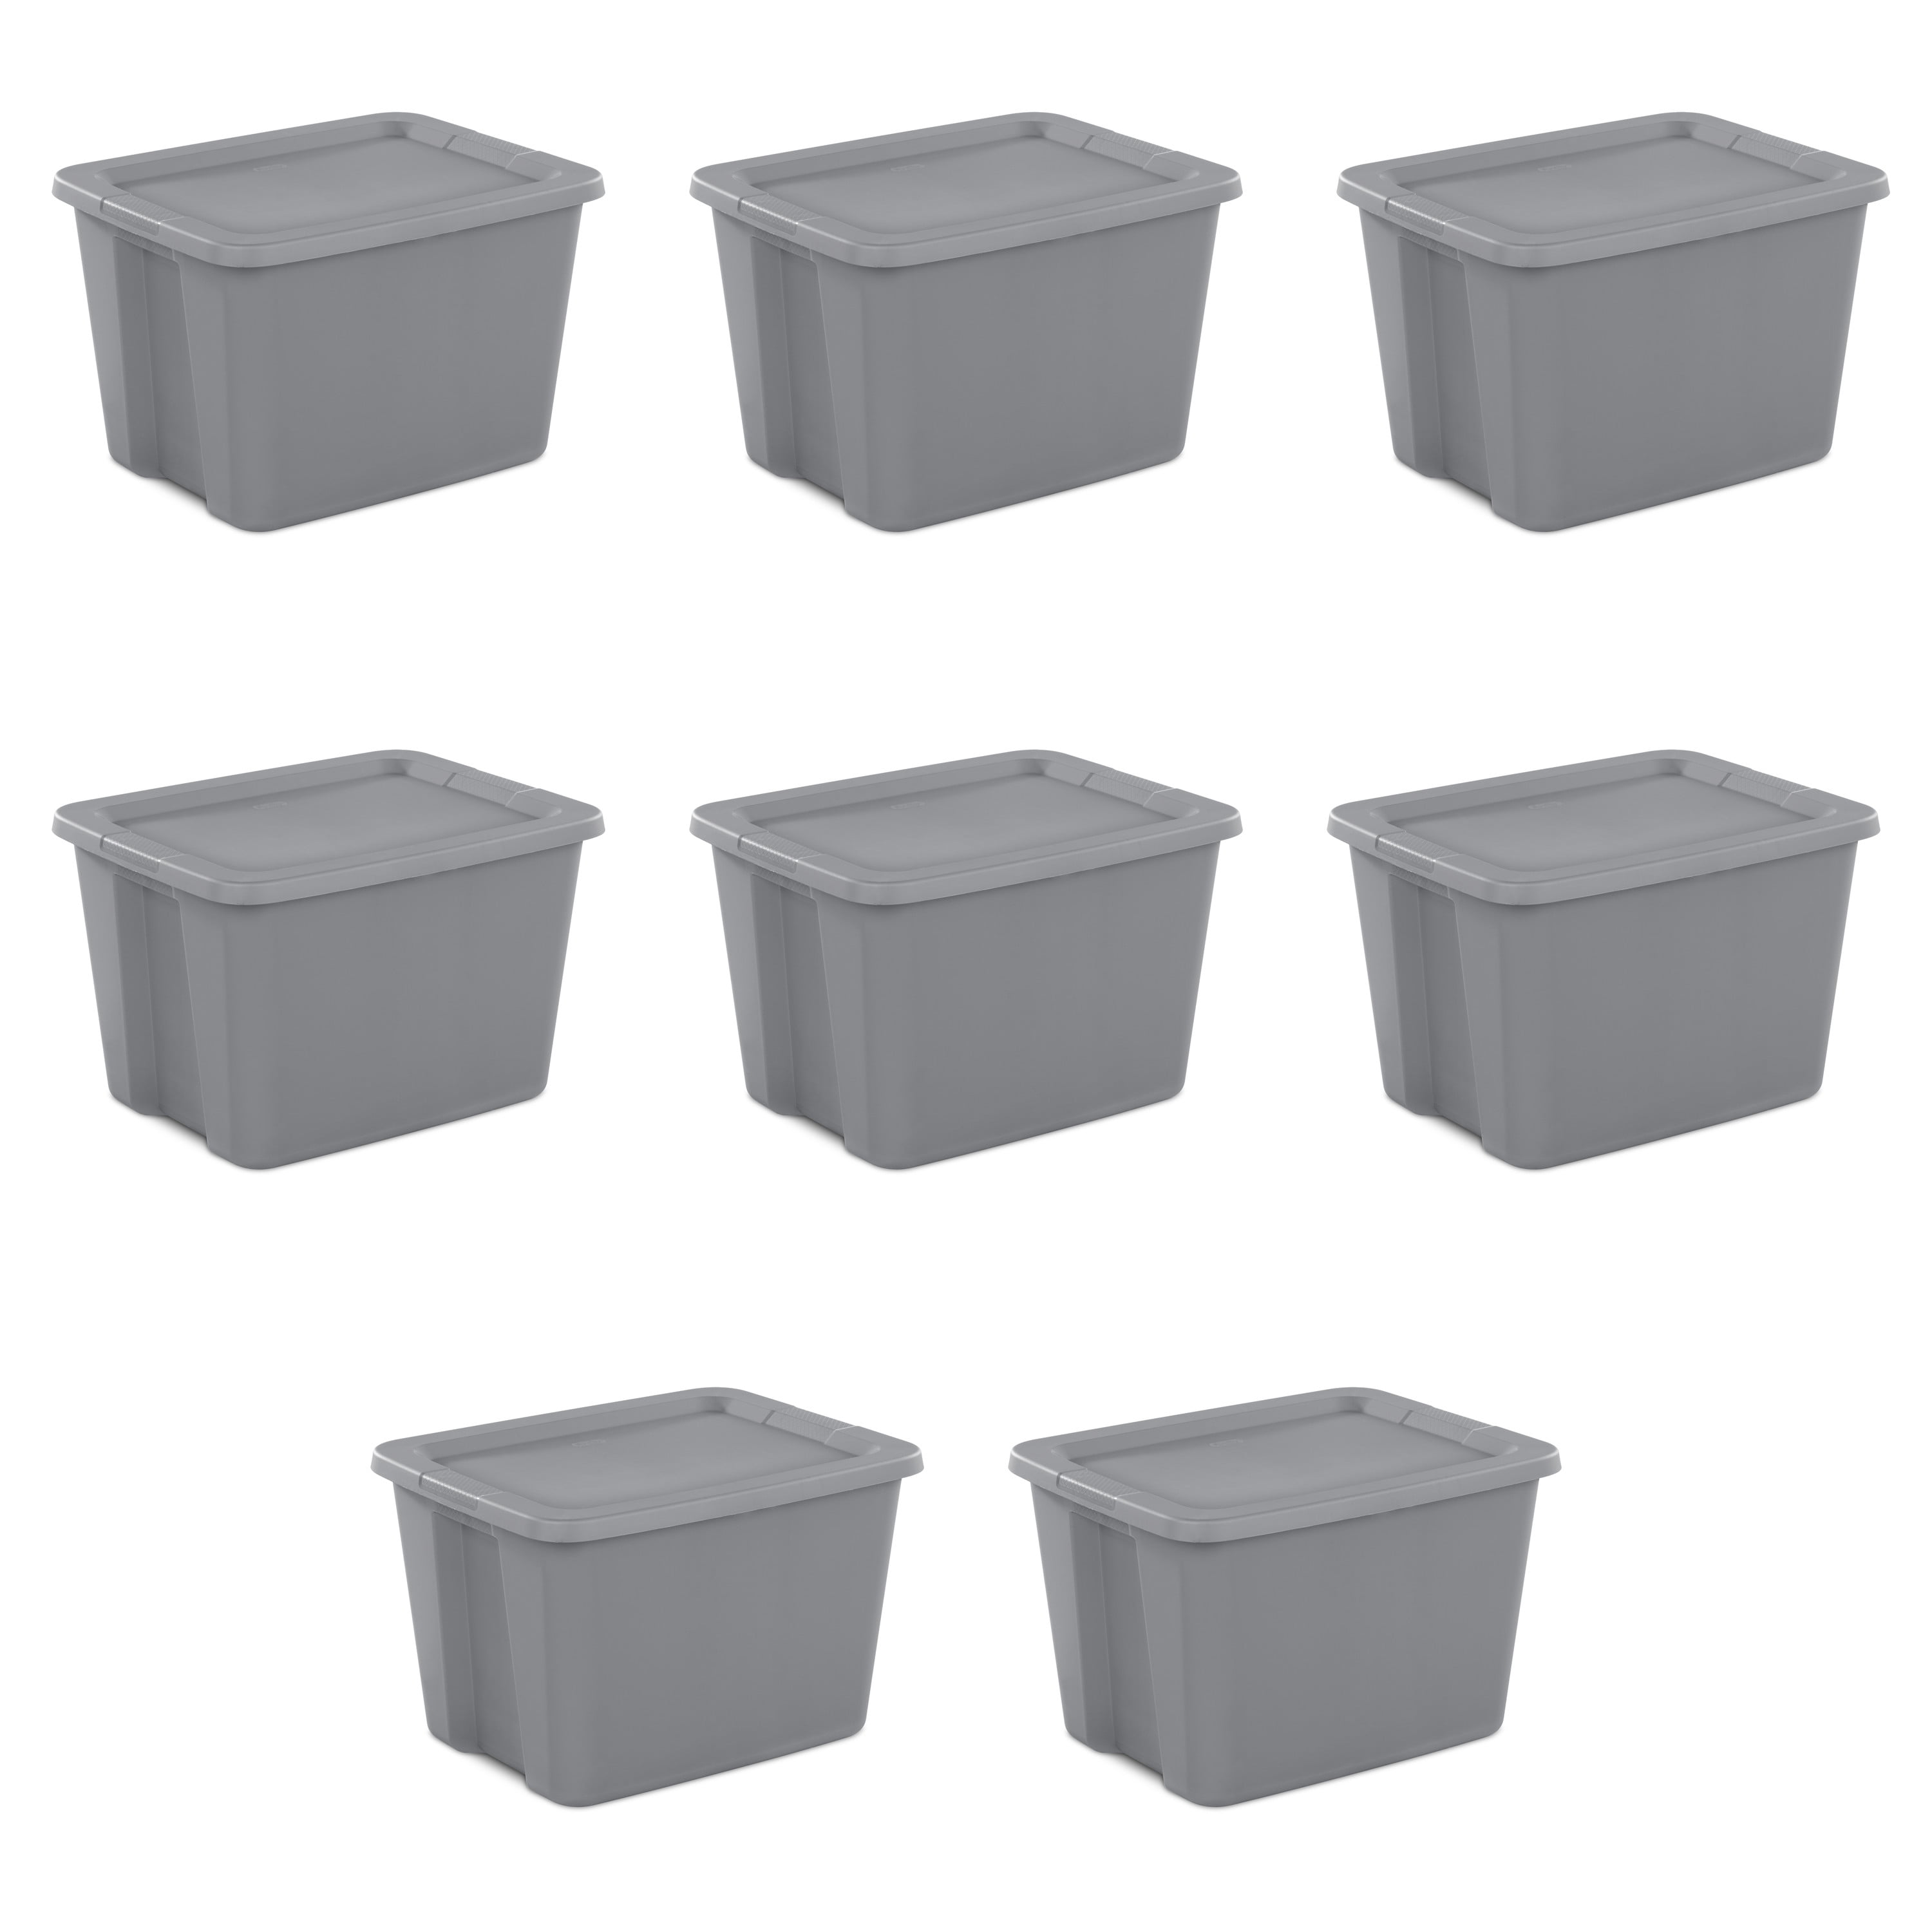 Sterilite 10 gal. Tote Box - Black - 20-5/8 x 14-1/8 x 12-3/8 H - Each